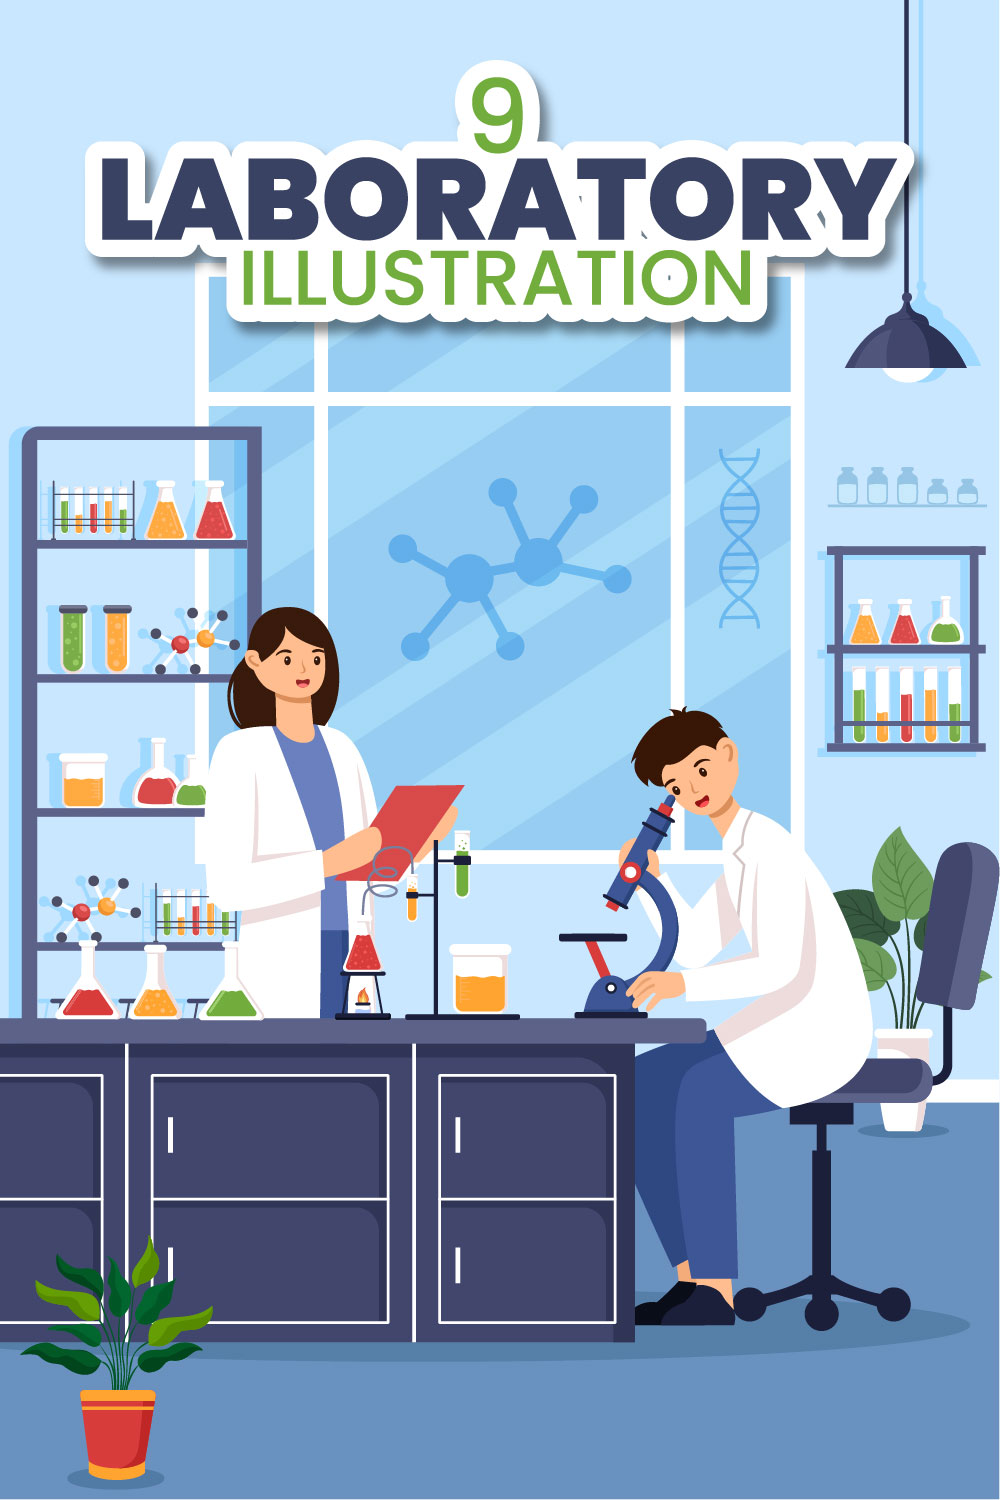 9 Laboratory Illustration pinterest preview image.